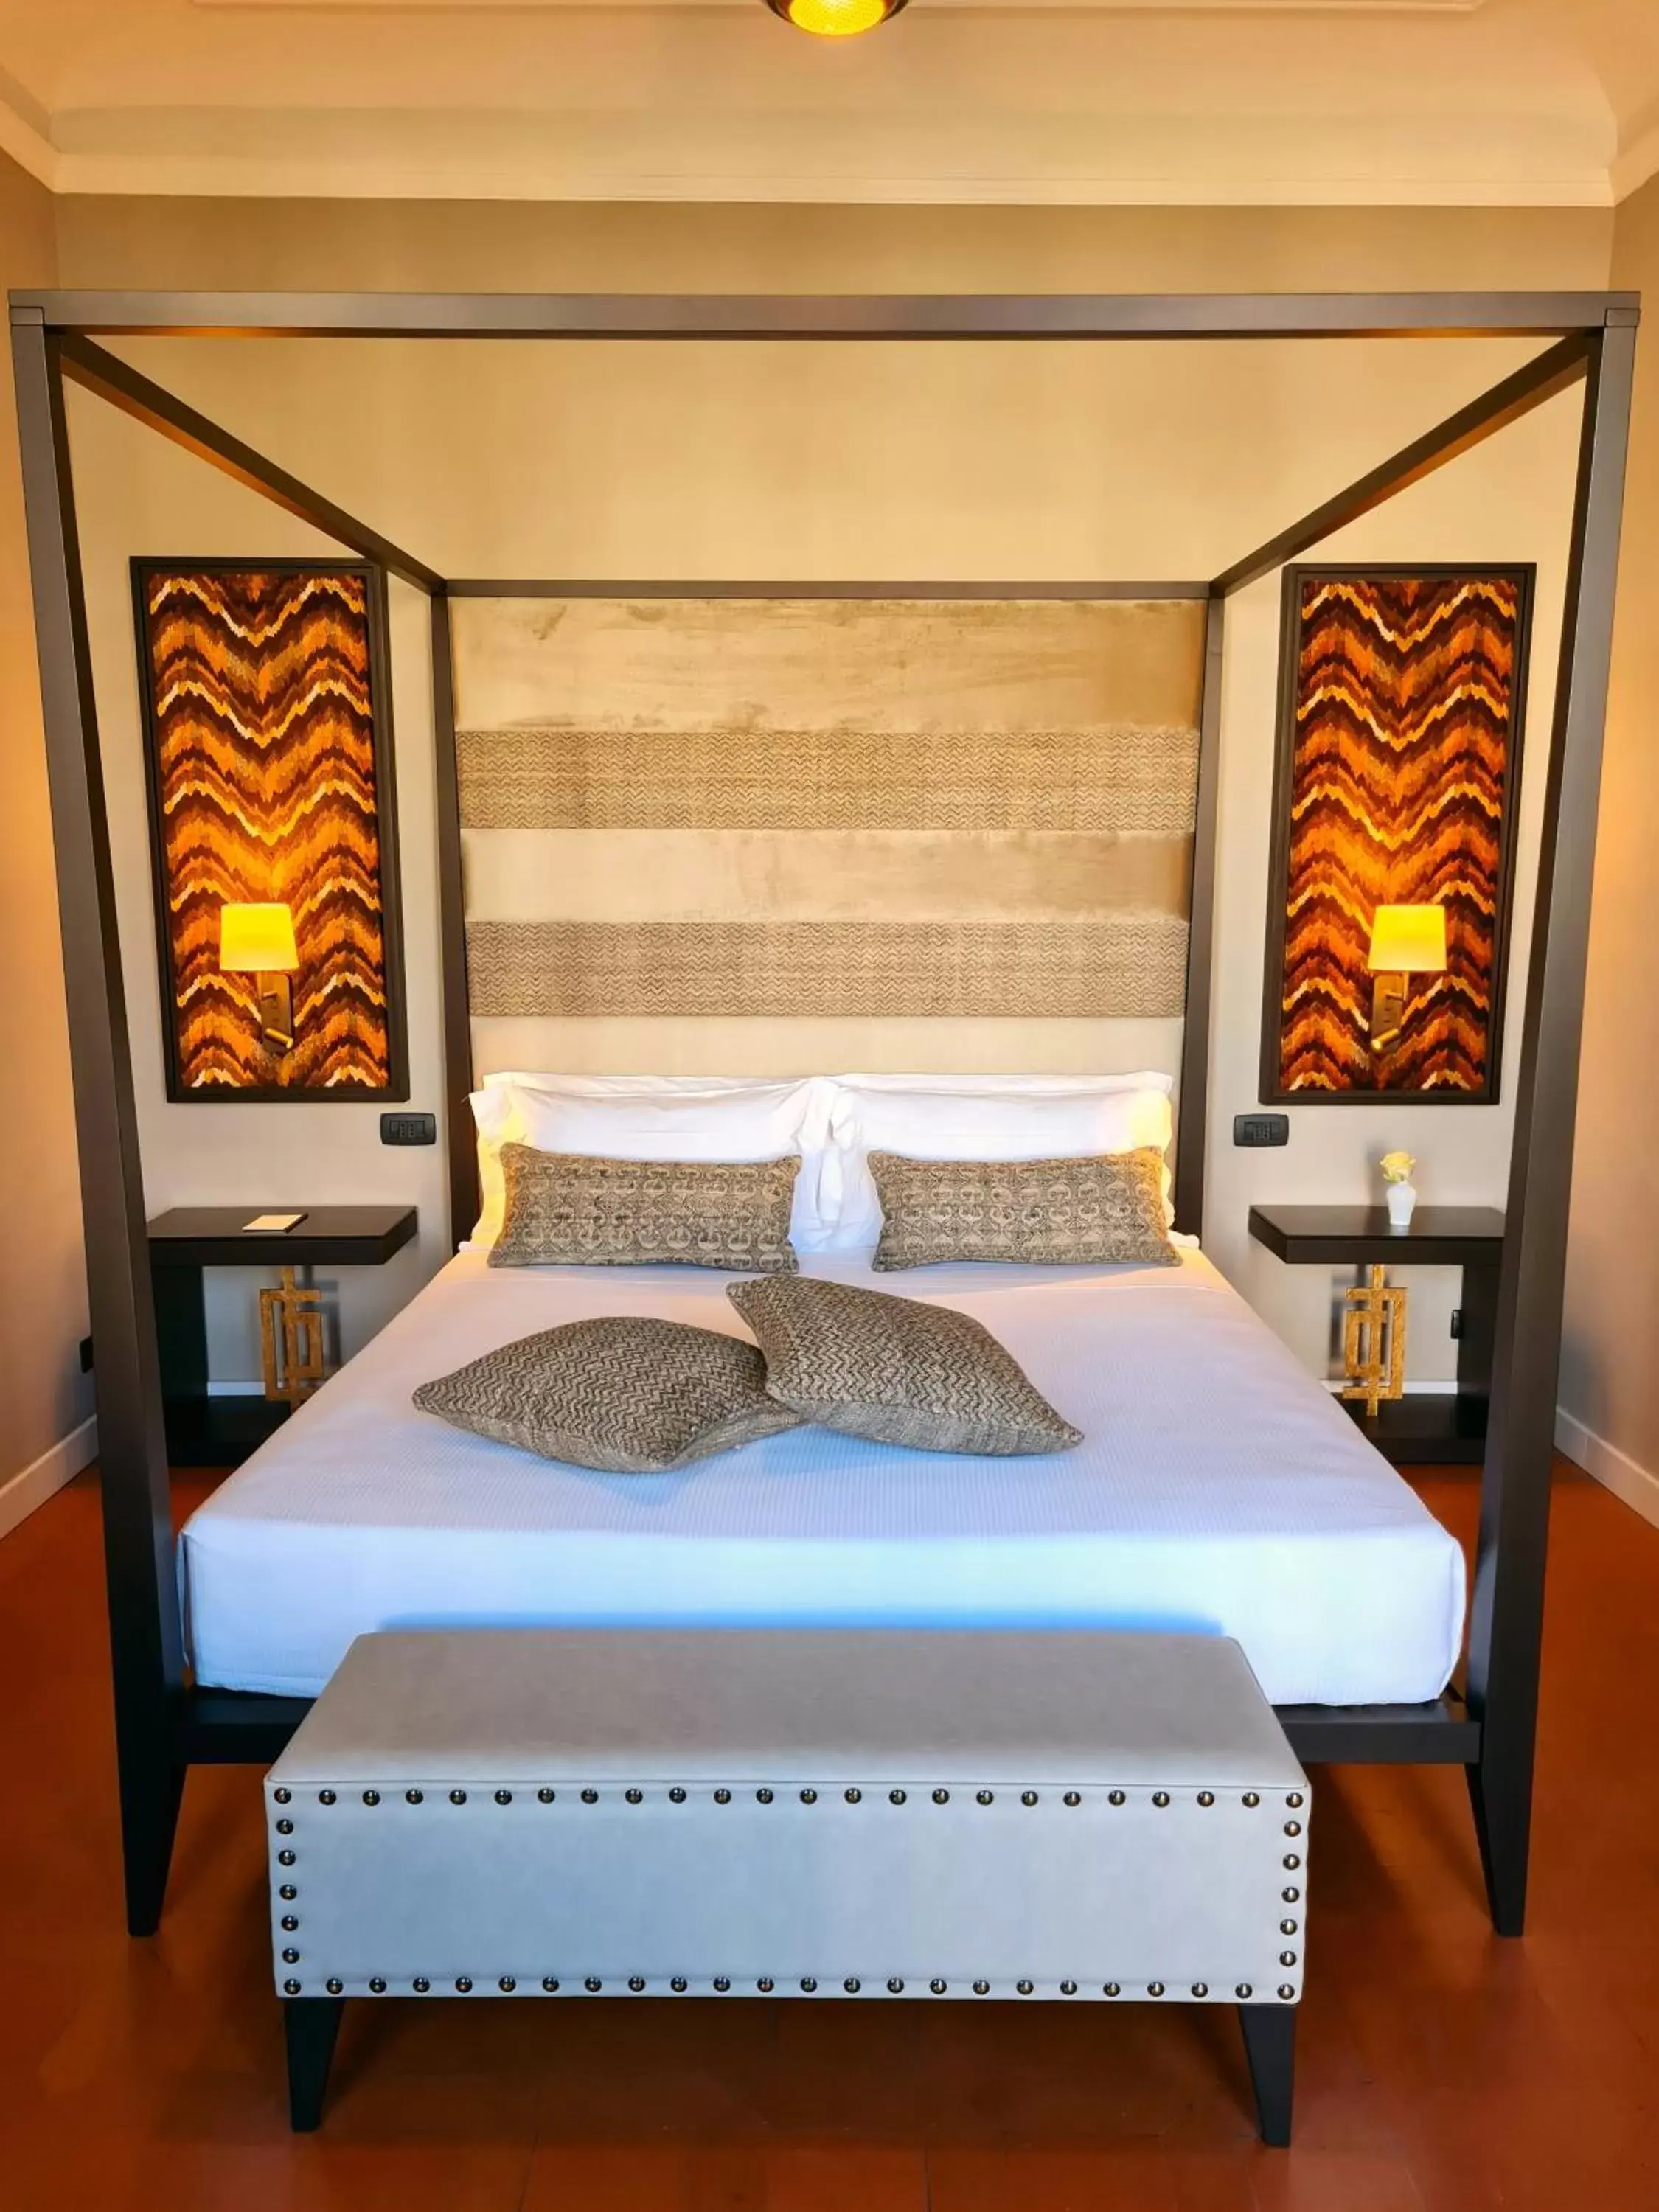 Bed in Santa Maria Novella - WTB Hotels